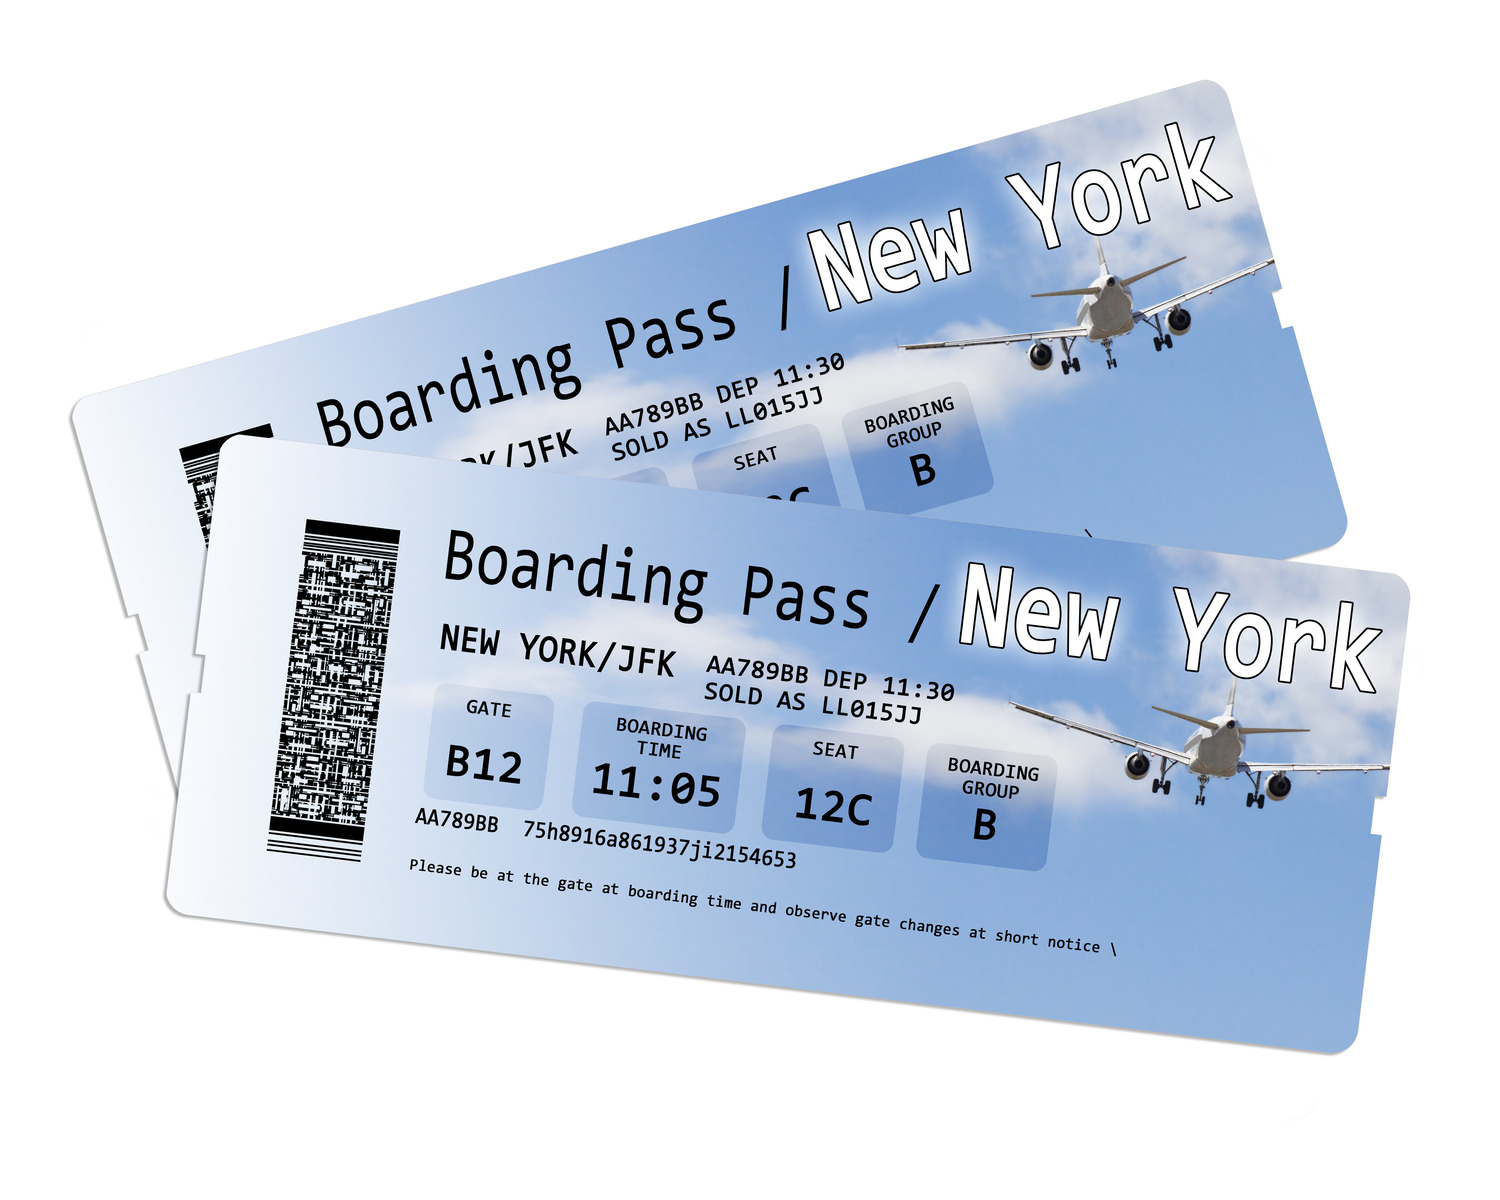 Cardholders also receive preferred boarding